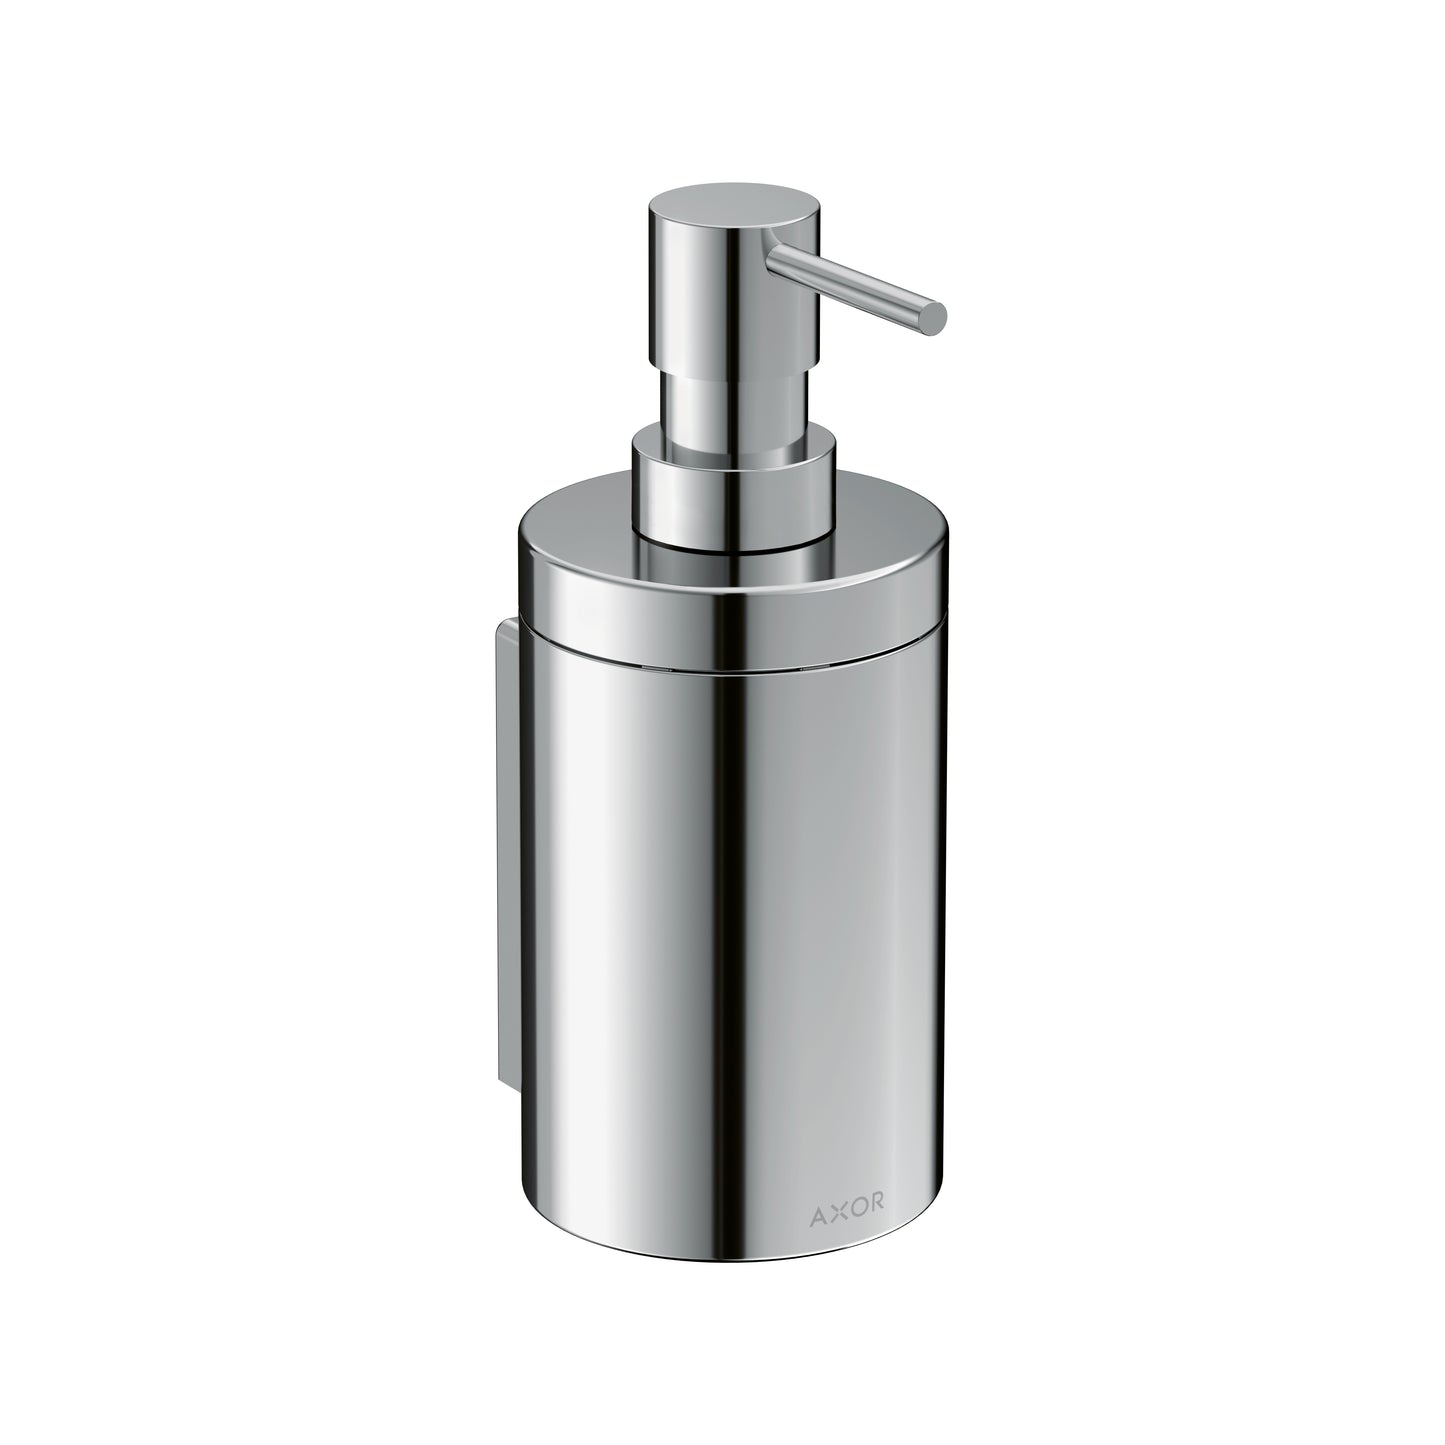 AXOR 42810000 Chrome Universal Circular Modern Soap Dispenser